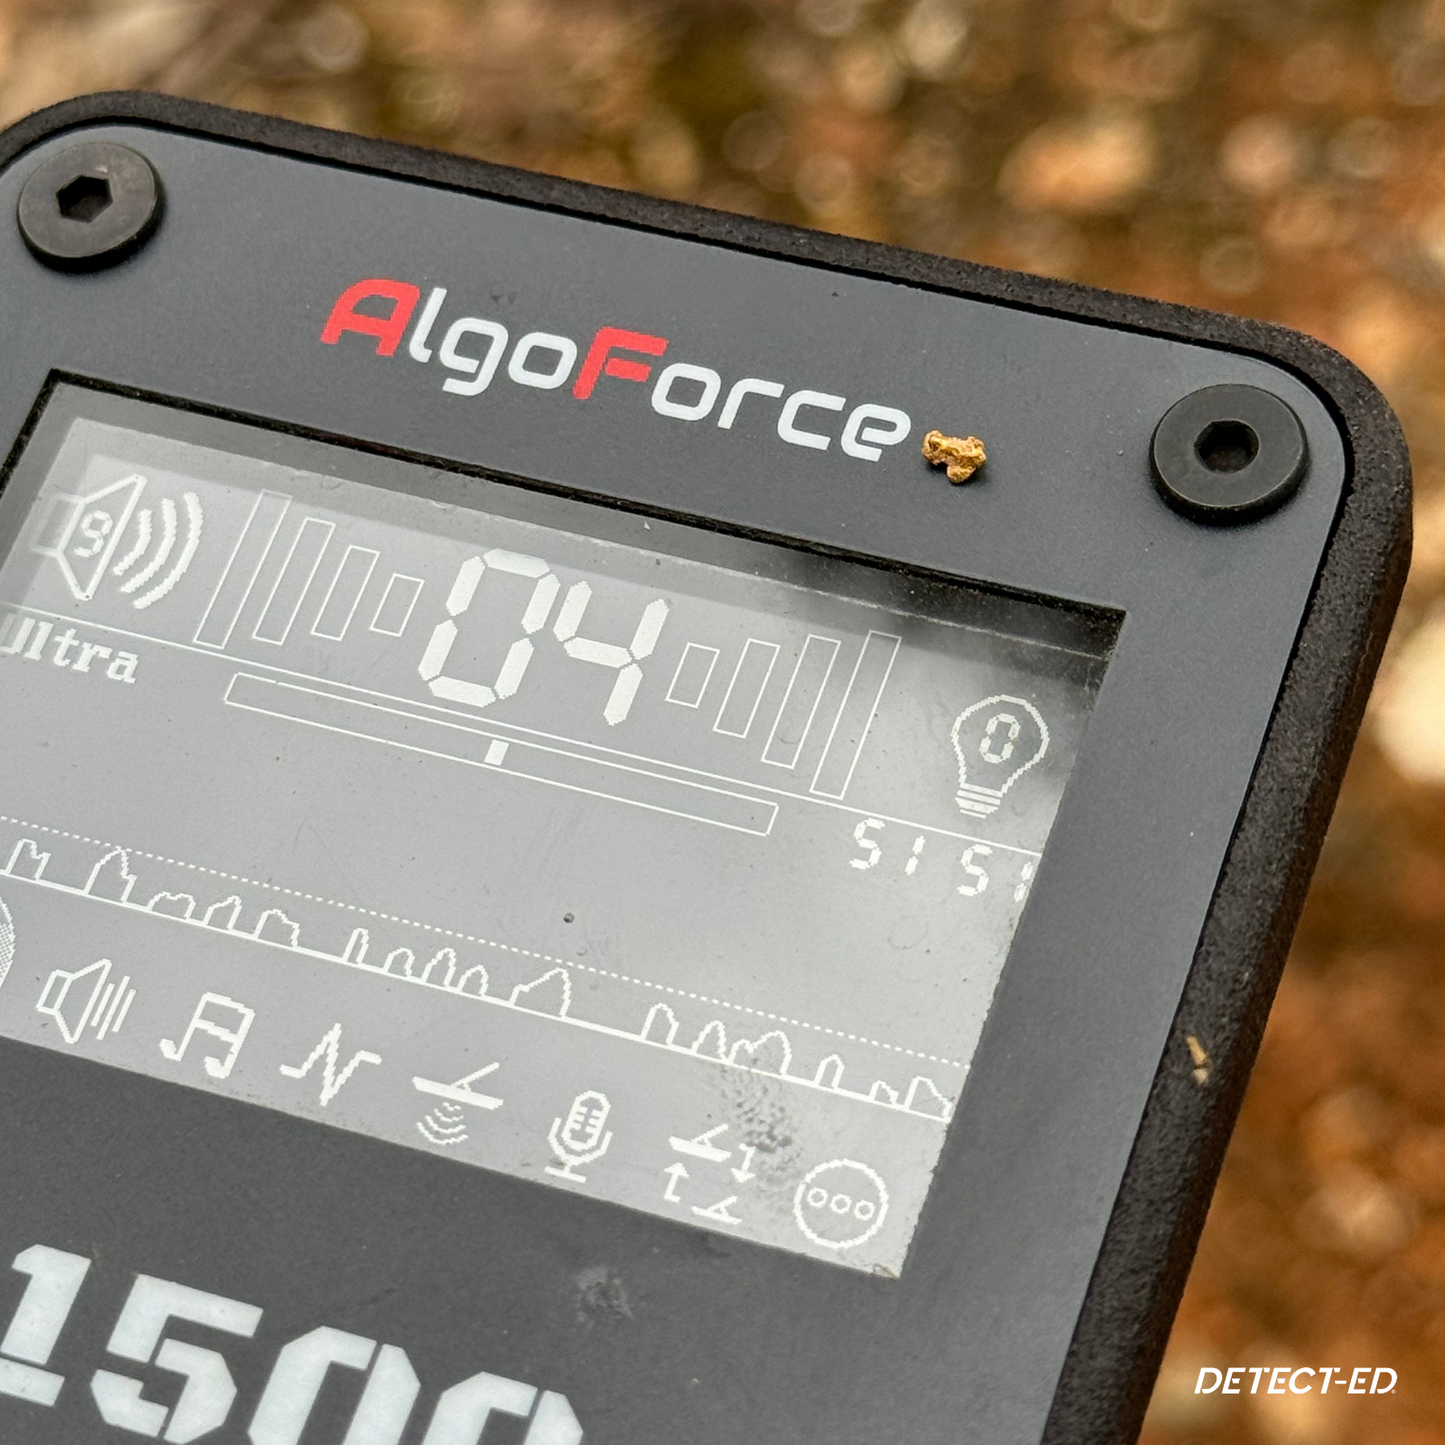 AlgoForce E1500